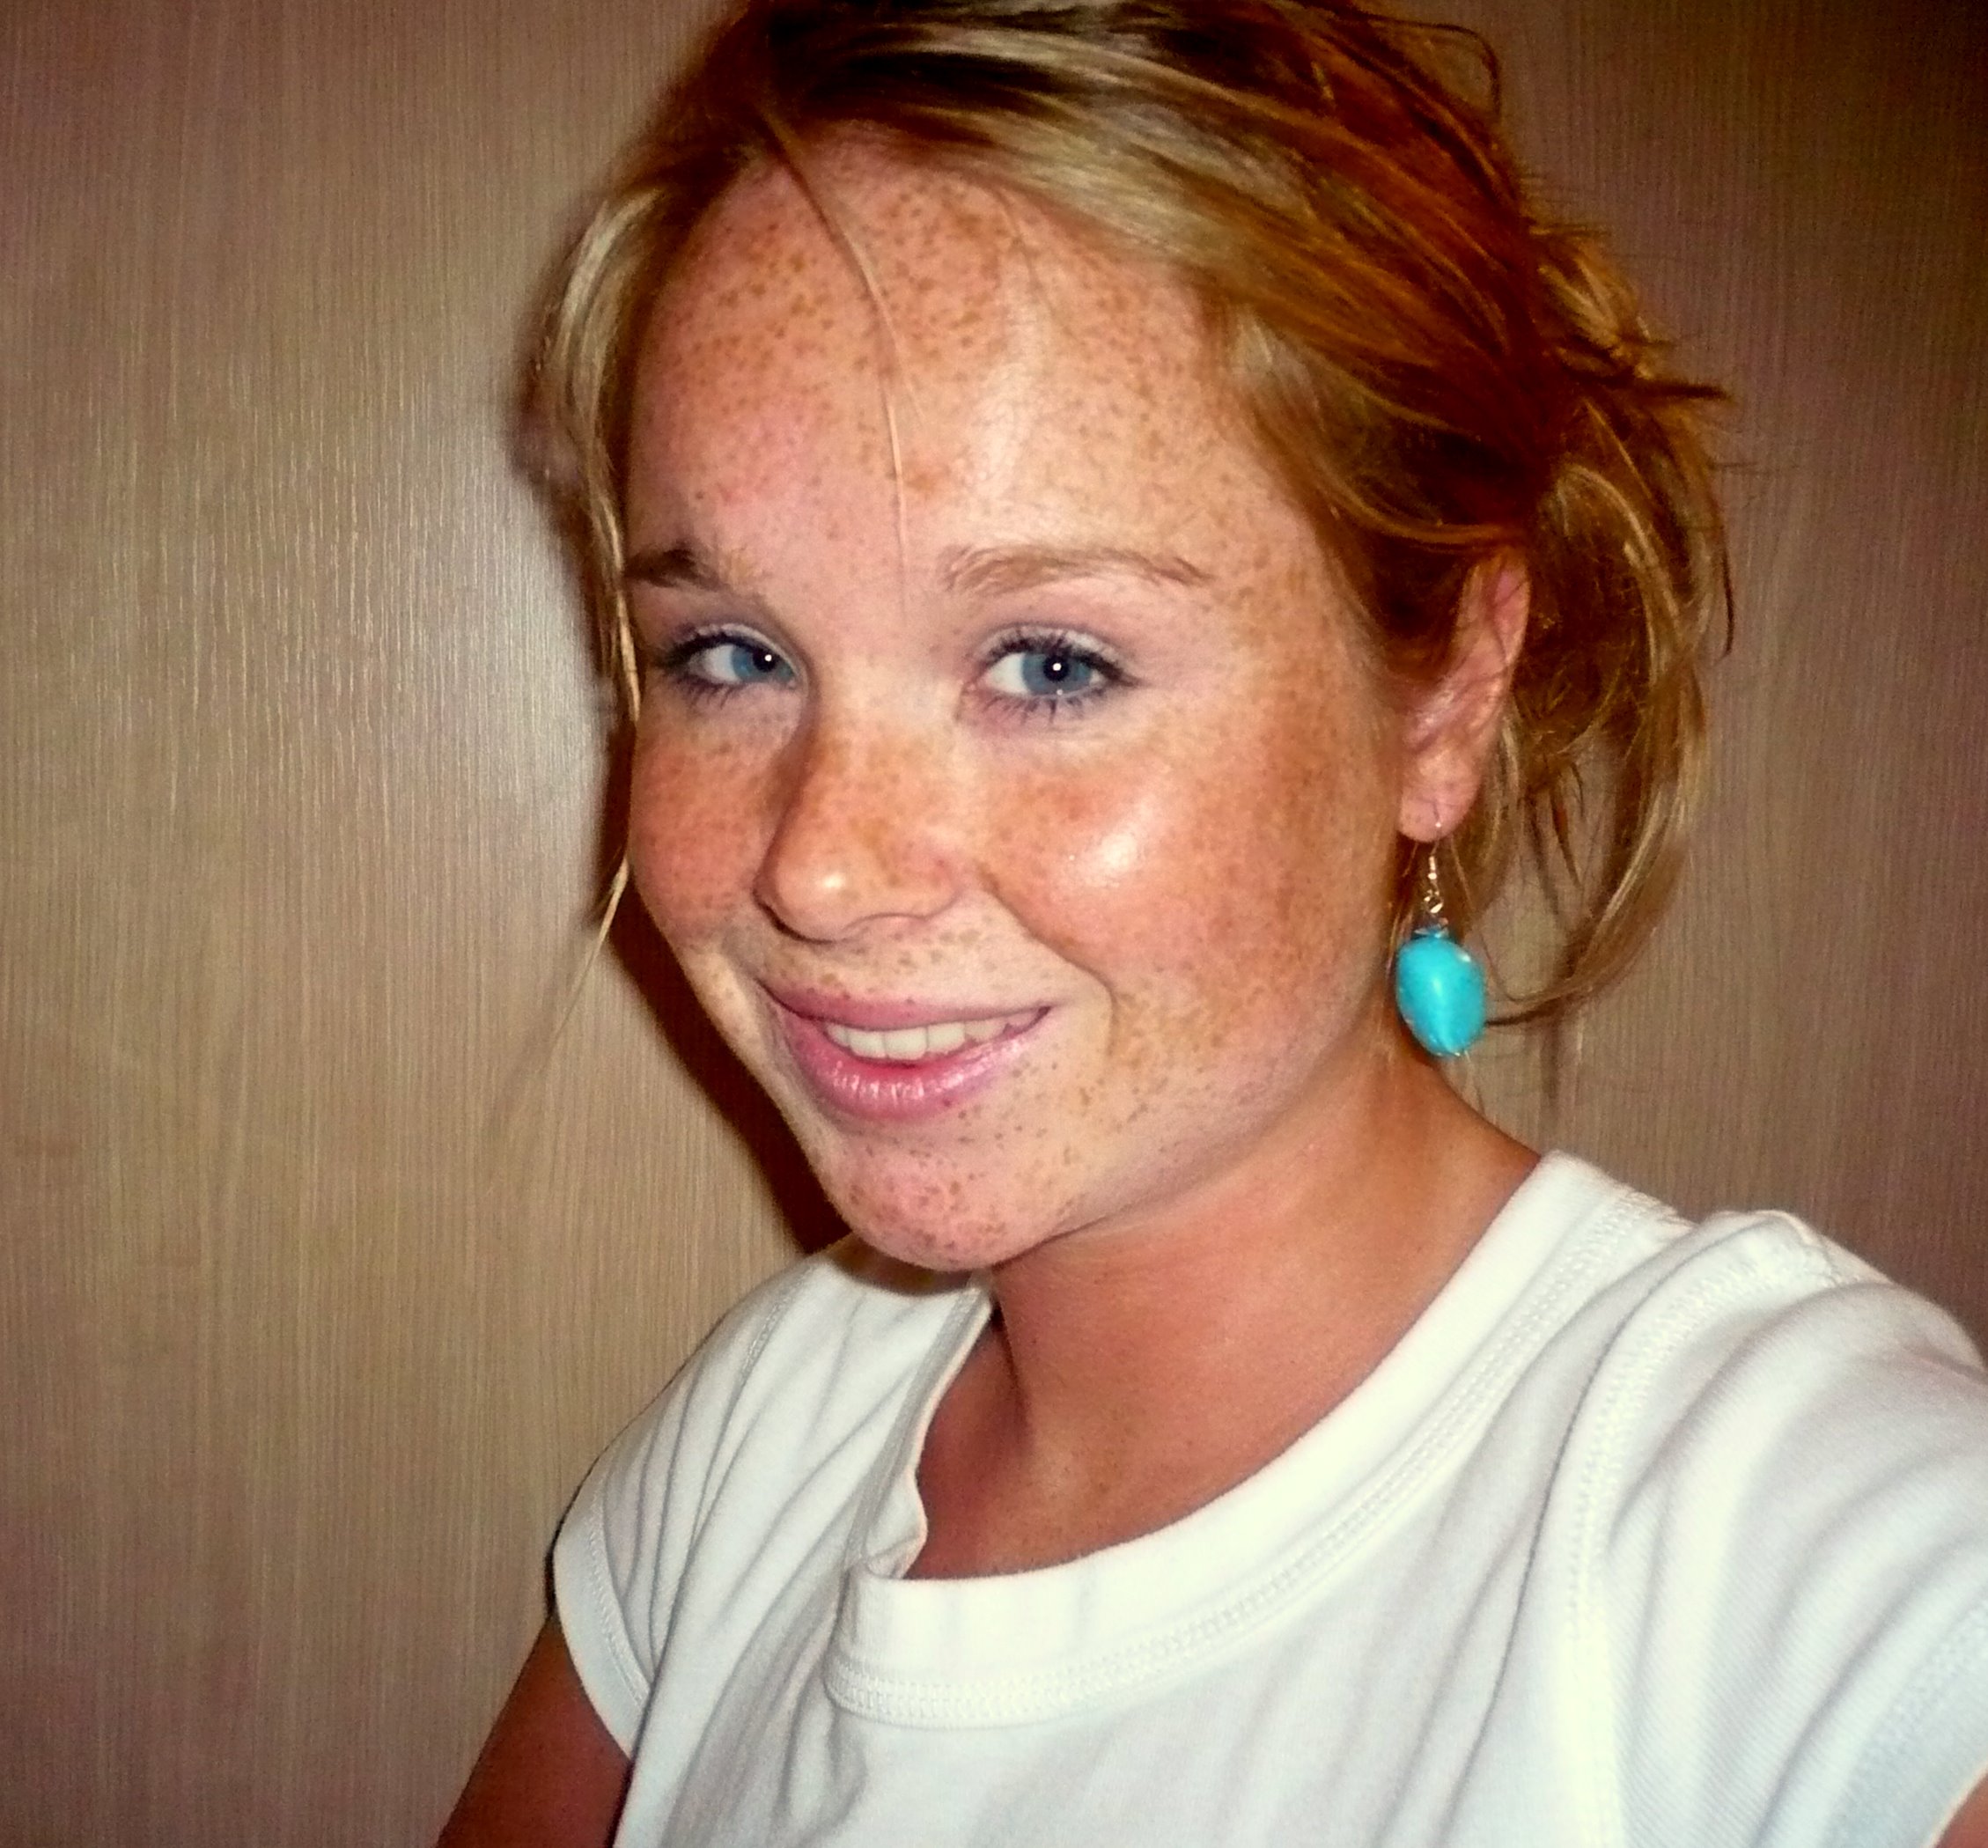 freckles, faces - desktop wallpaper